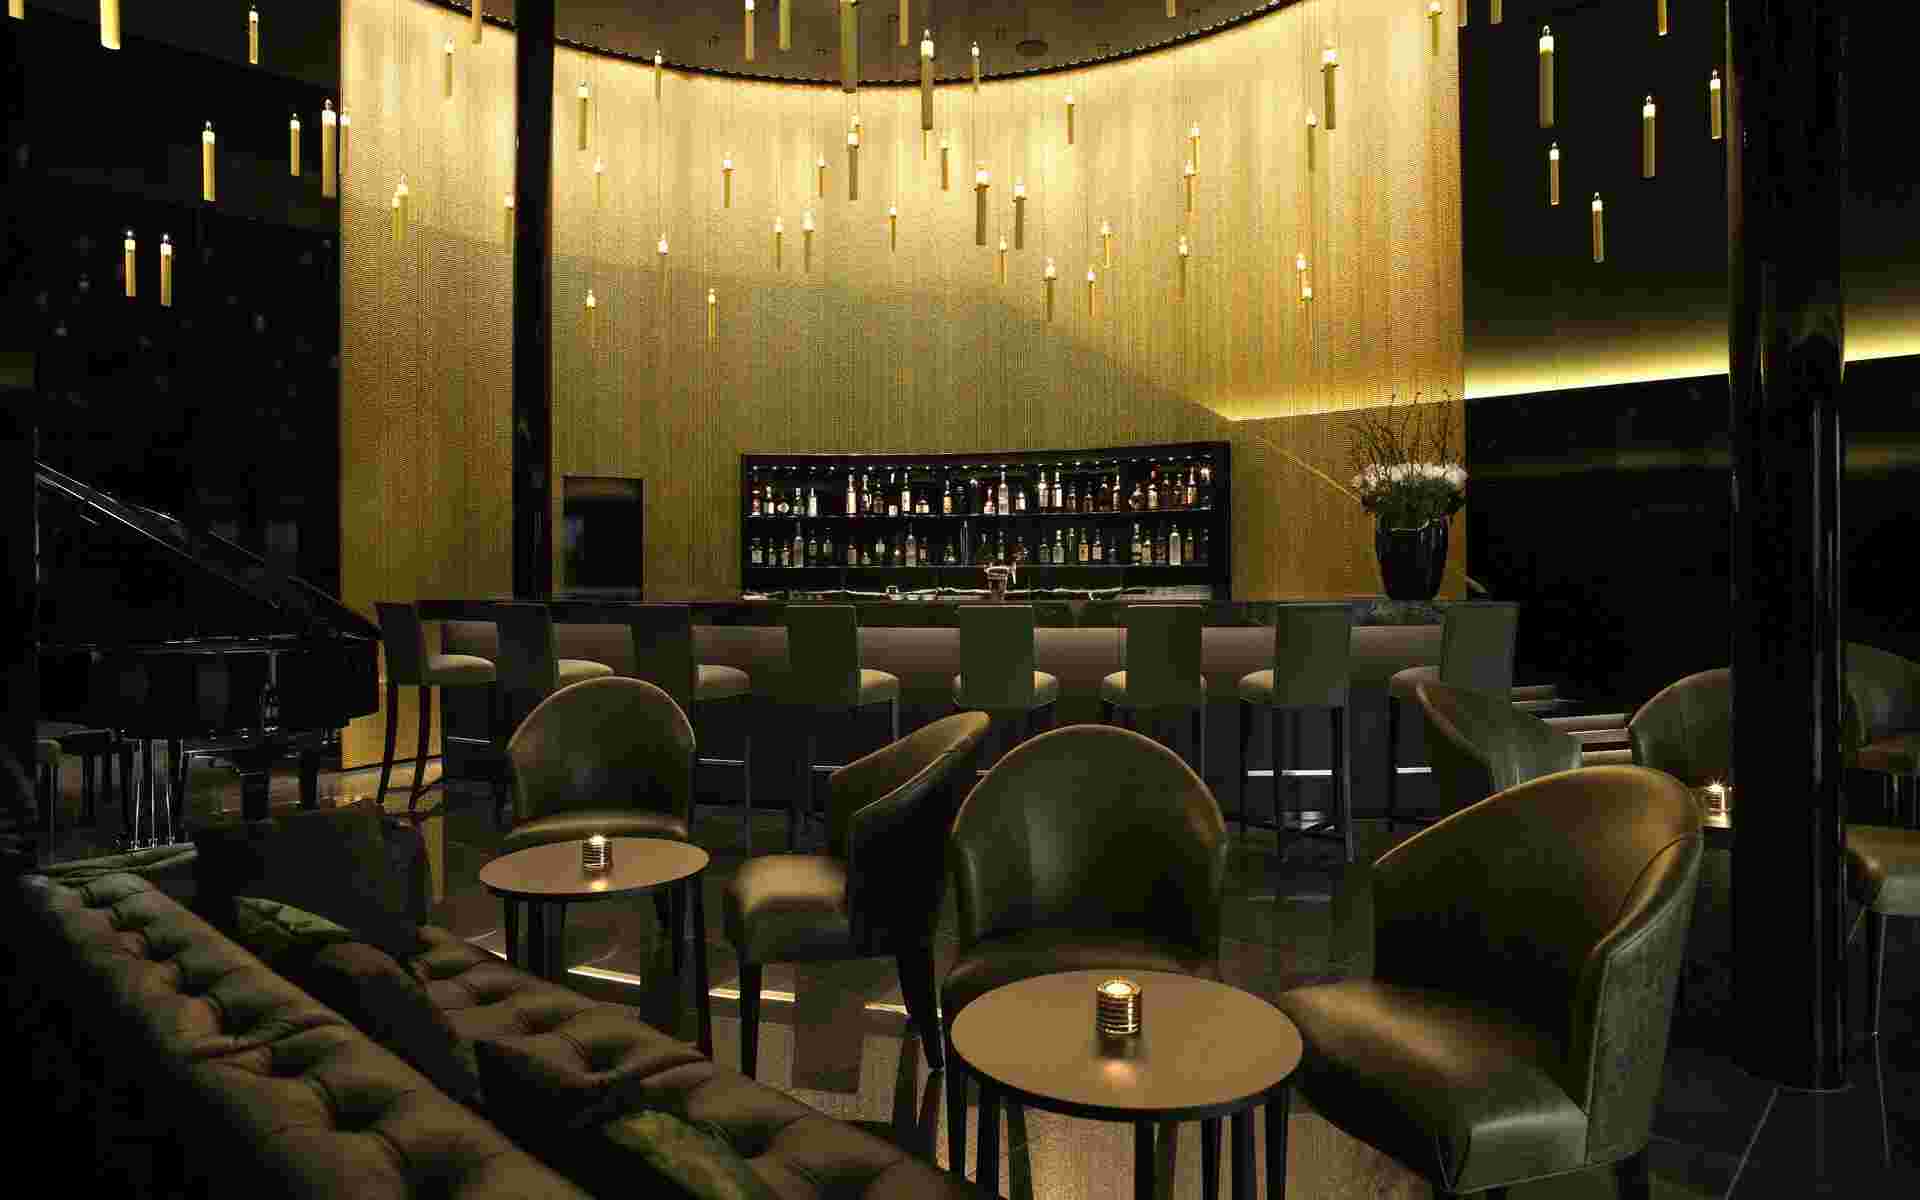 Restaurant and Bar Designs 05 wallpaper   Restaurant and Bar Designs